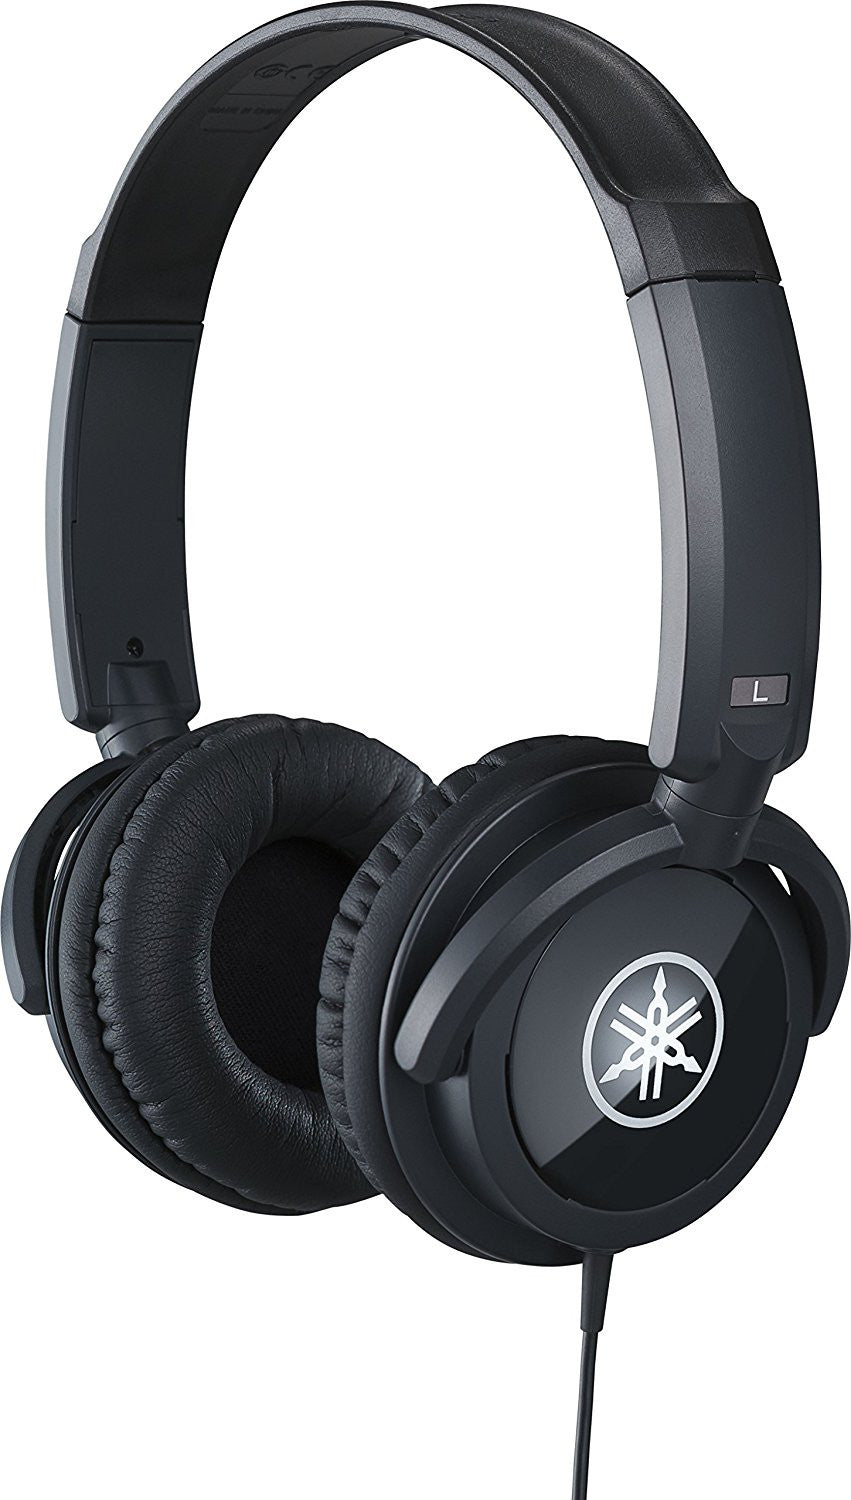 Yamaha HPH-100B Mid-Range Instrument Headphones - Black